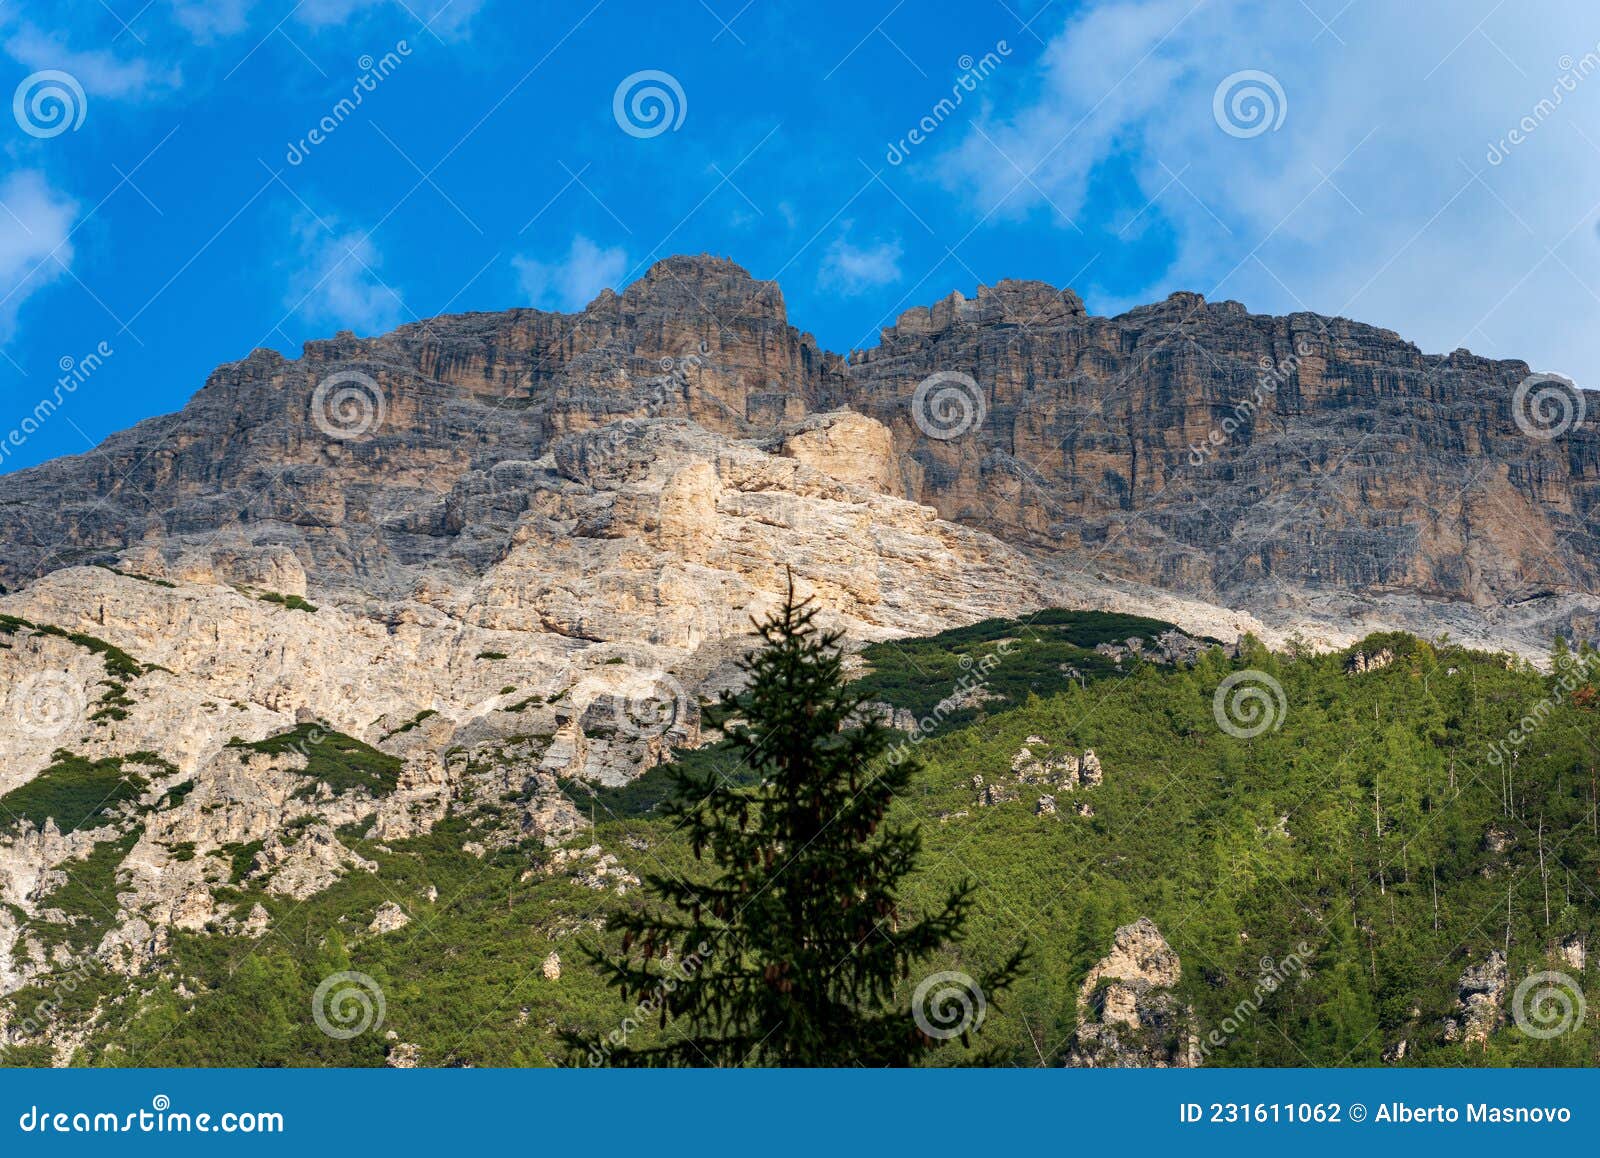 rautkofel or monte rudo in landro valley - sesto dolomites italian alps